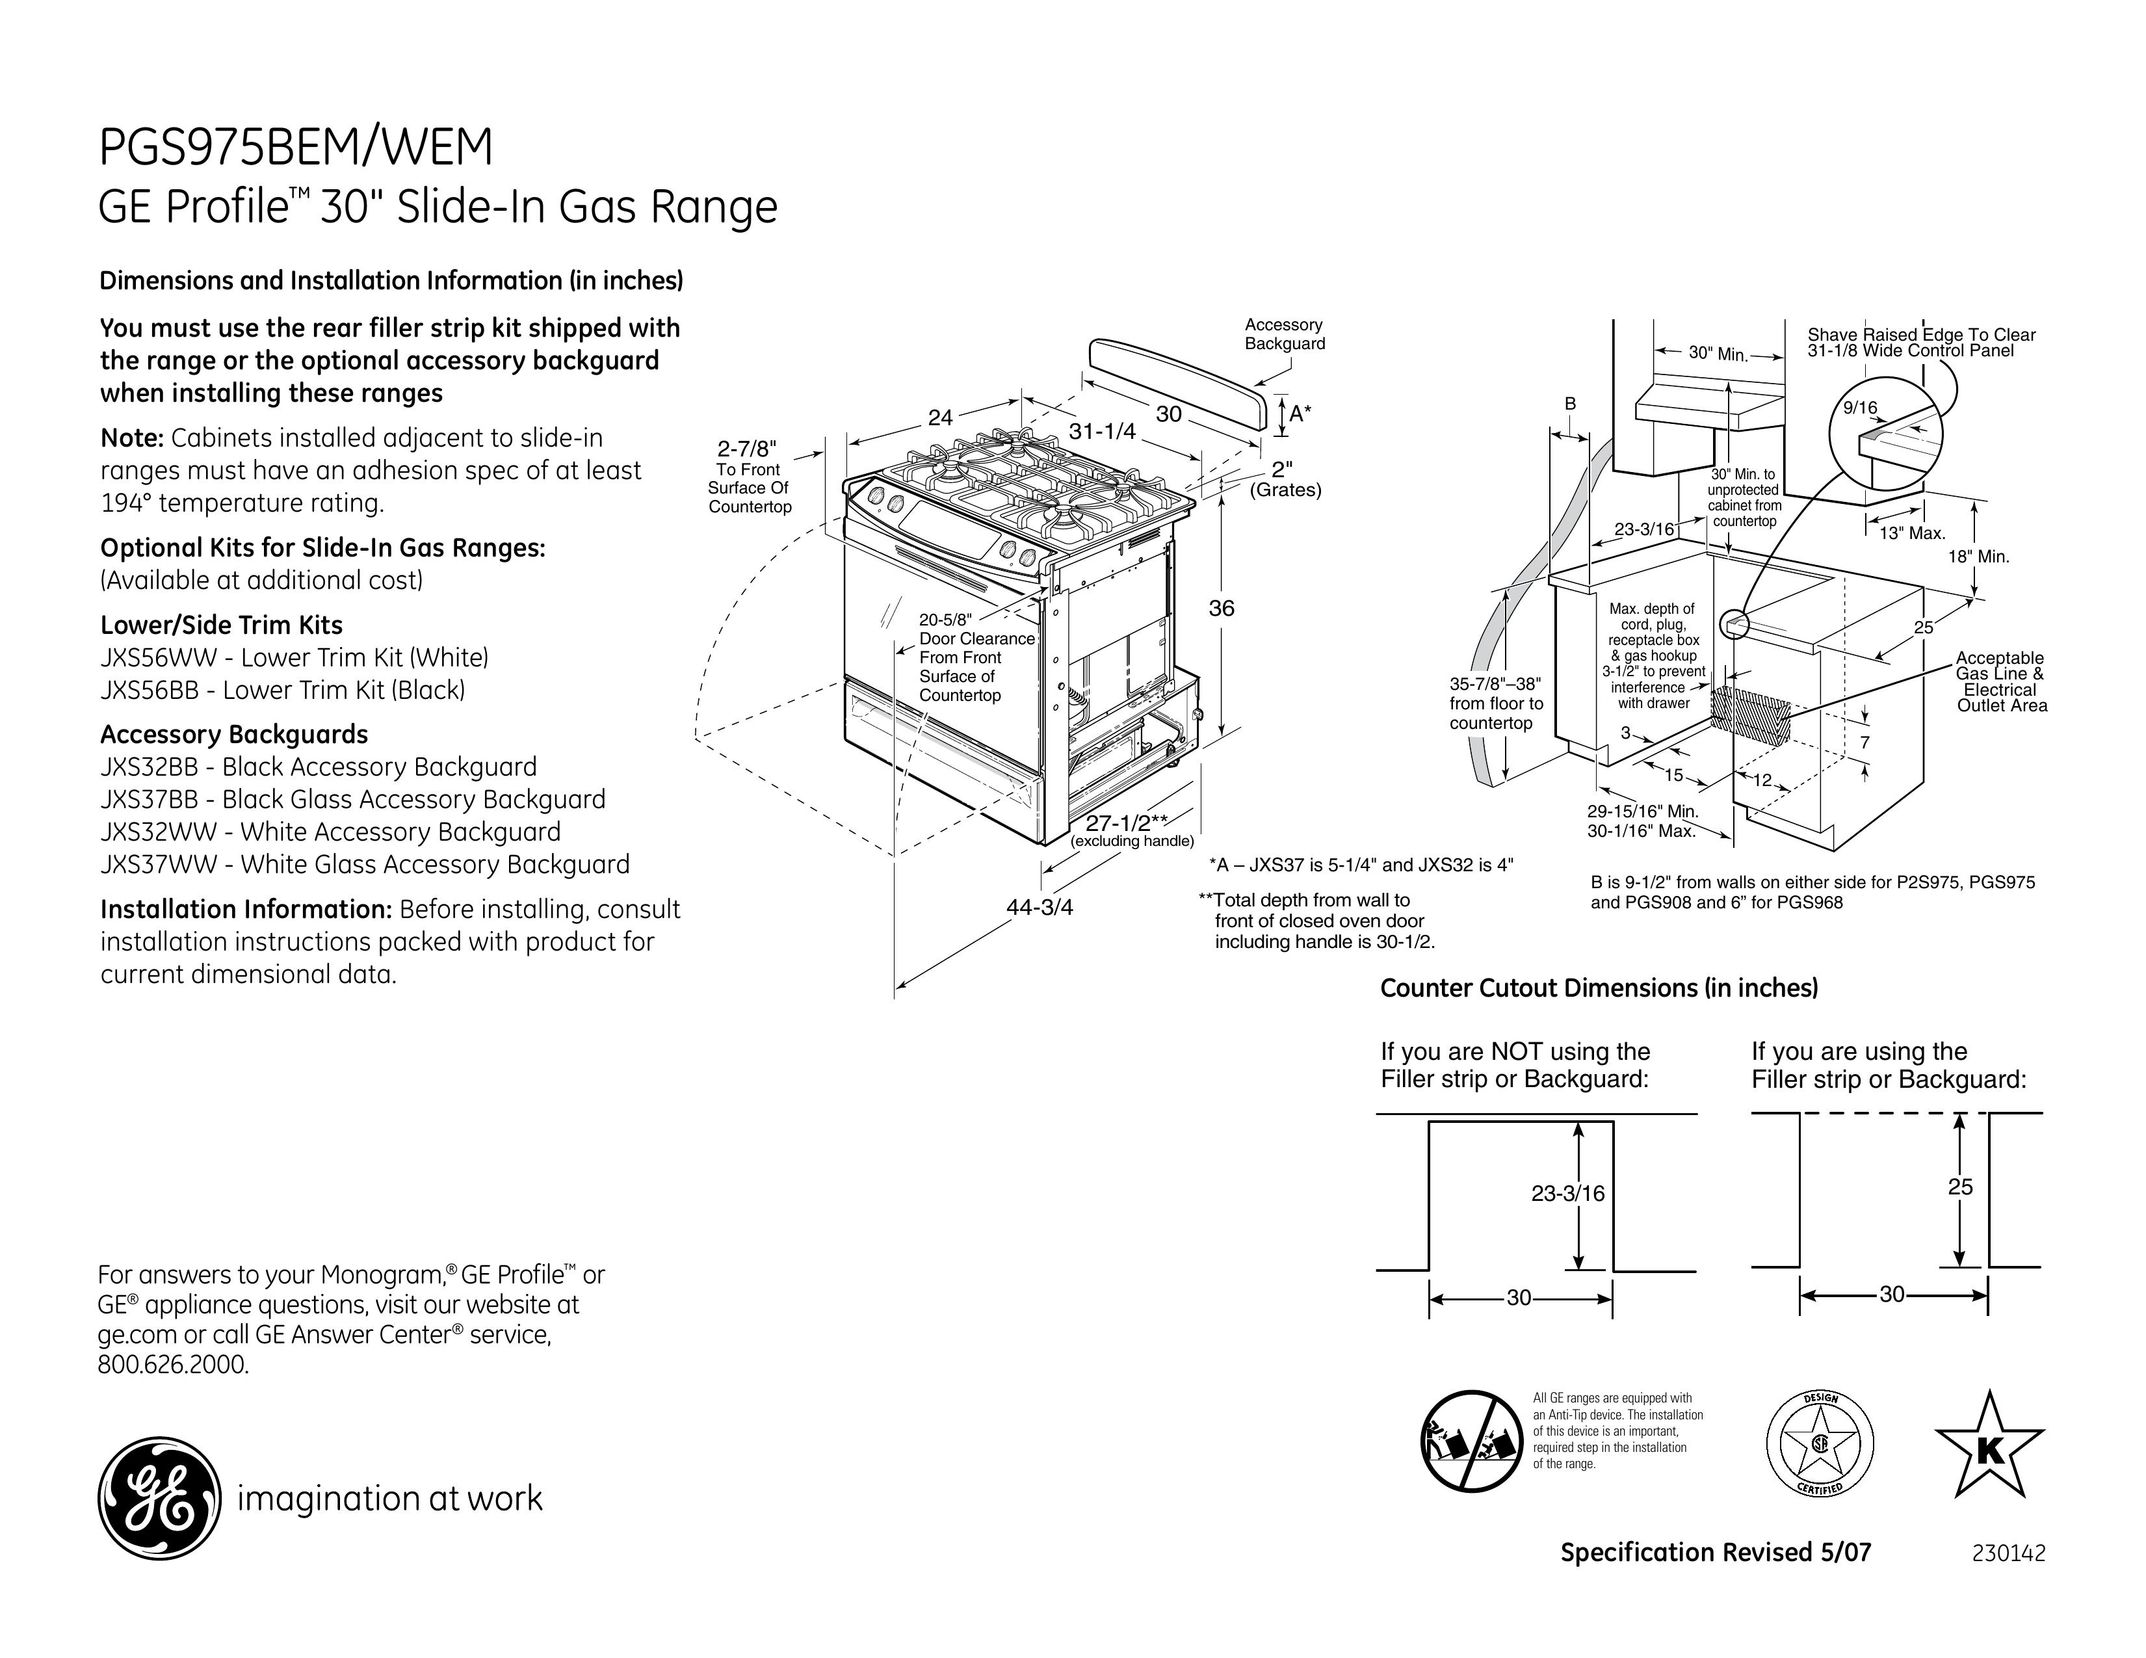 GE PGS975WEM Computer Accessories User Manual